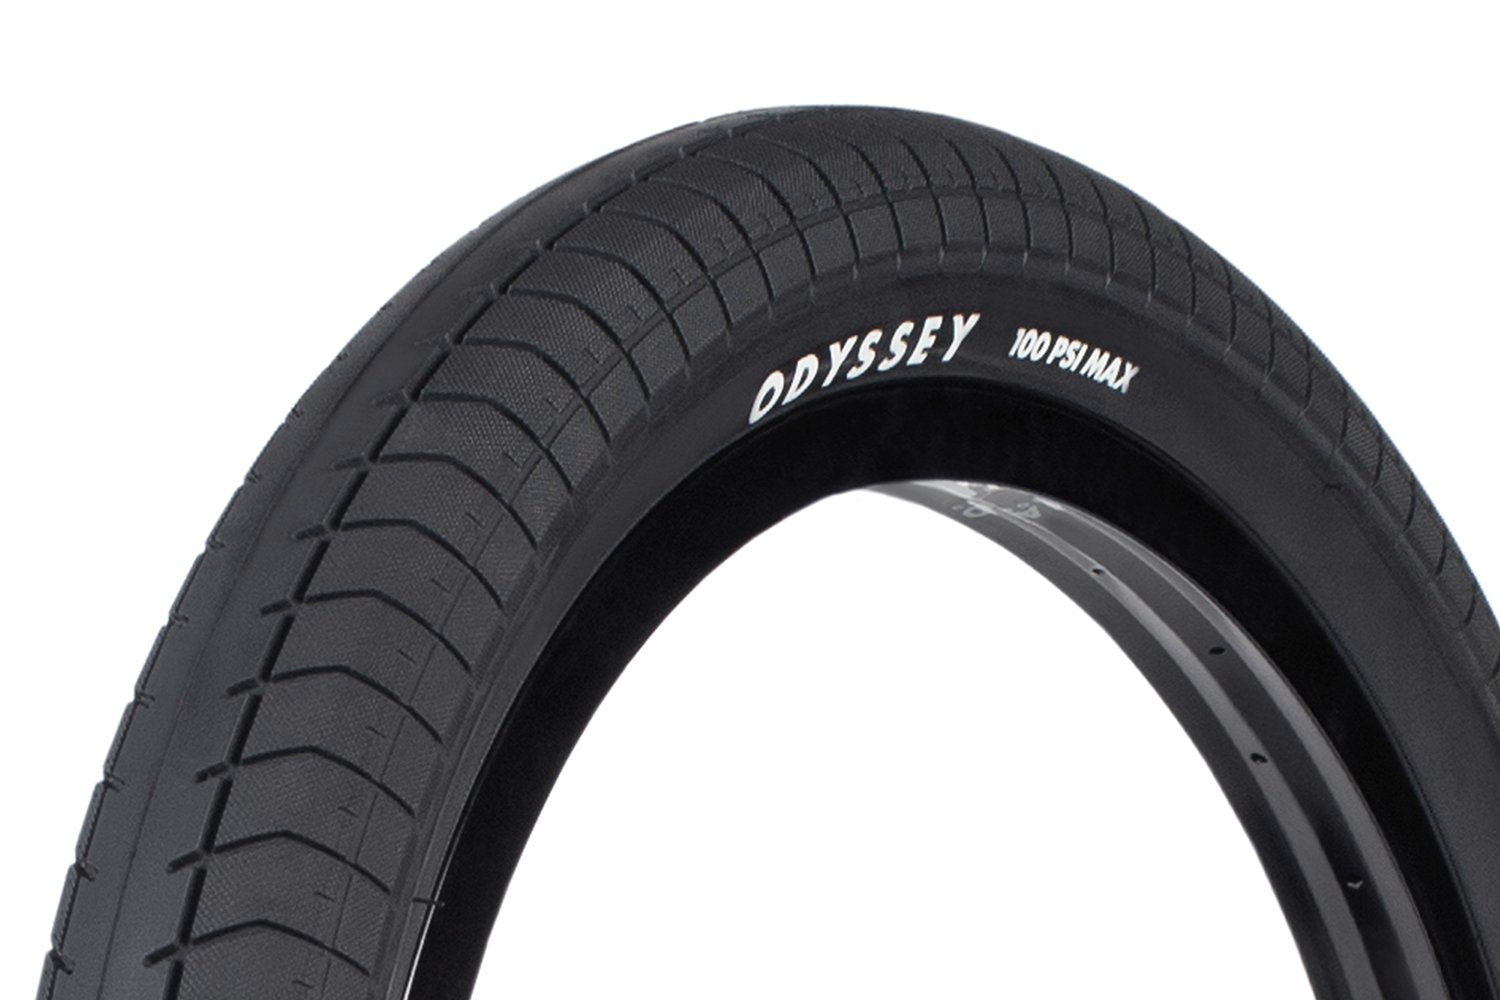 Odyssey Path Pro tire Black